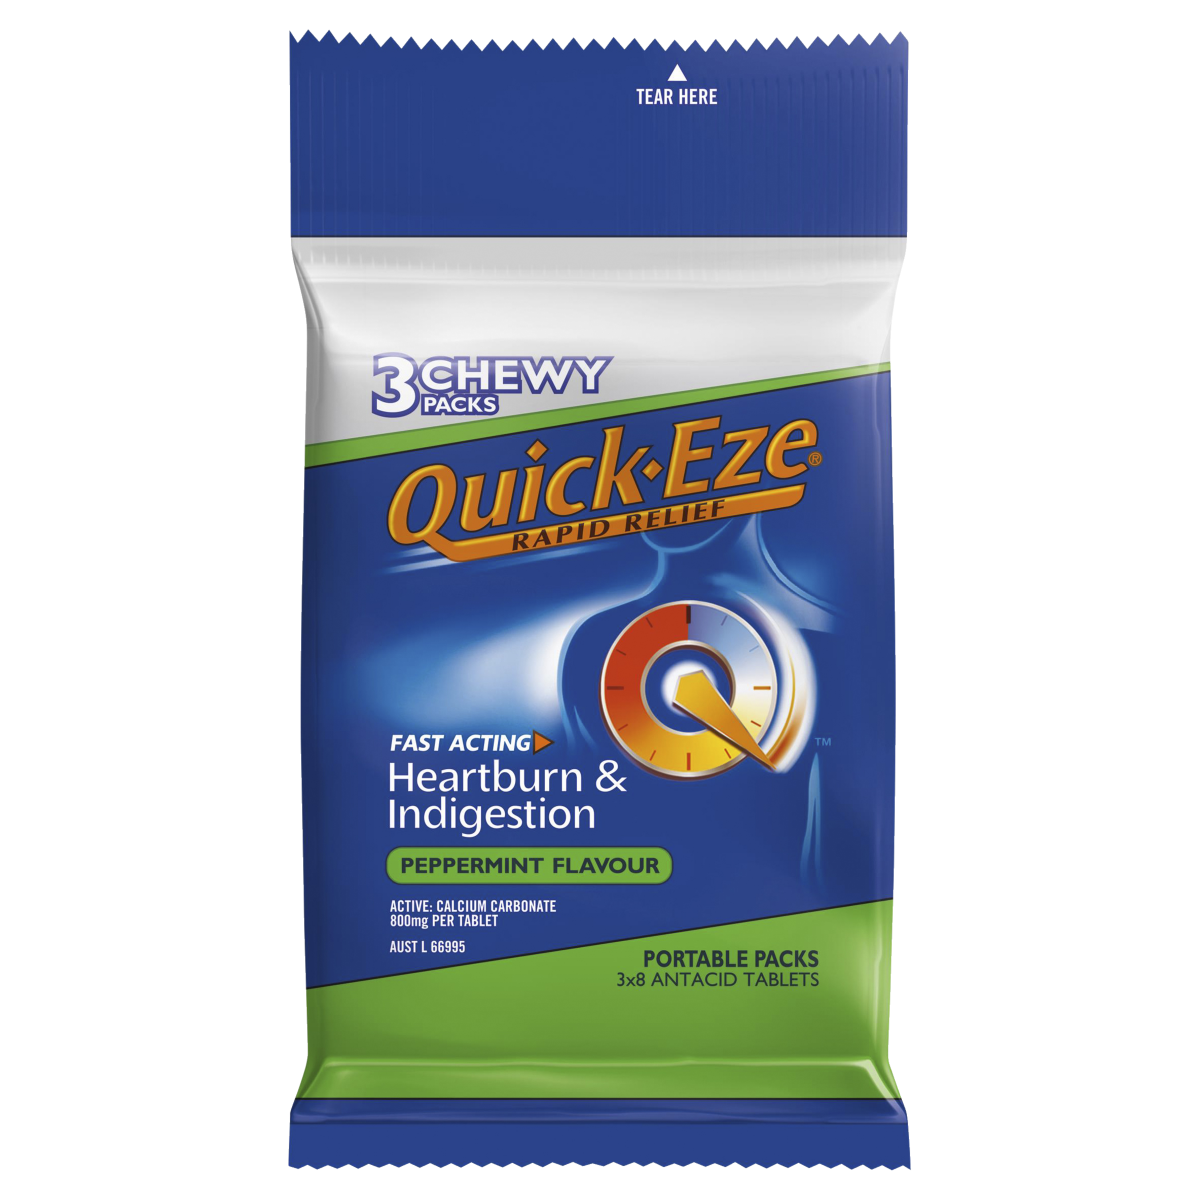 Quick-eze Heartburn & Indigestion Relief Original 60 Pack